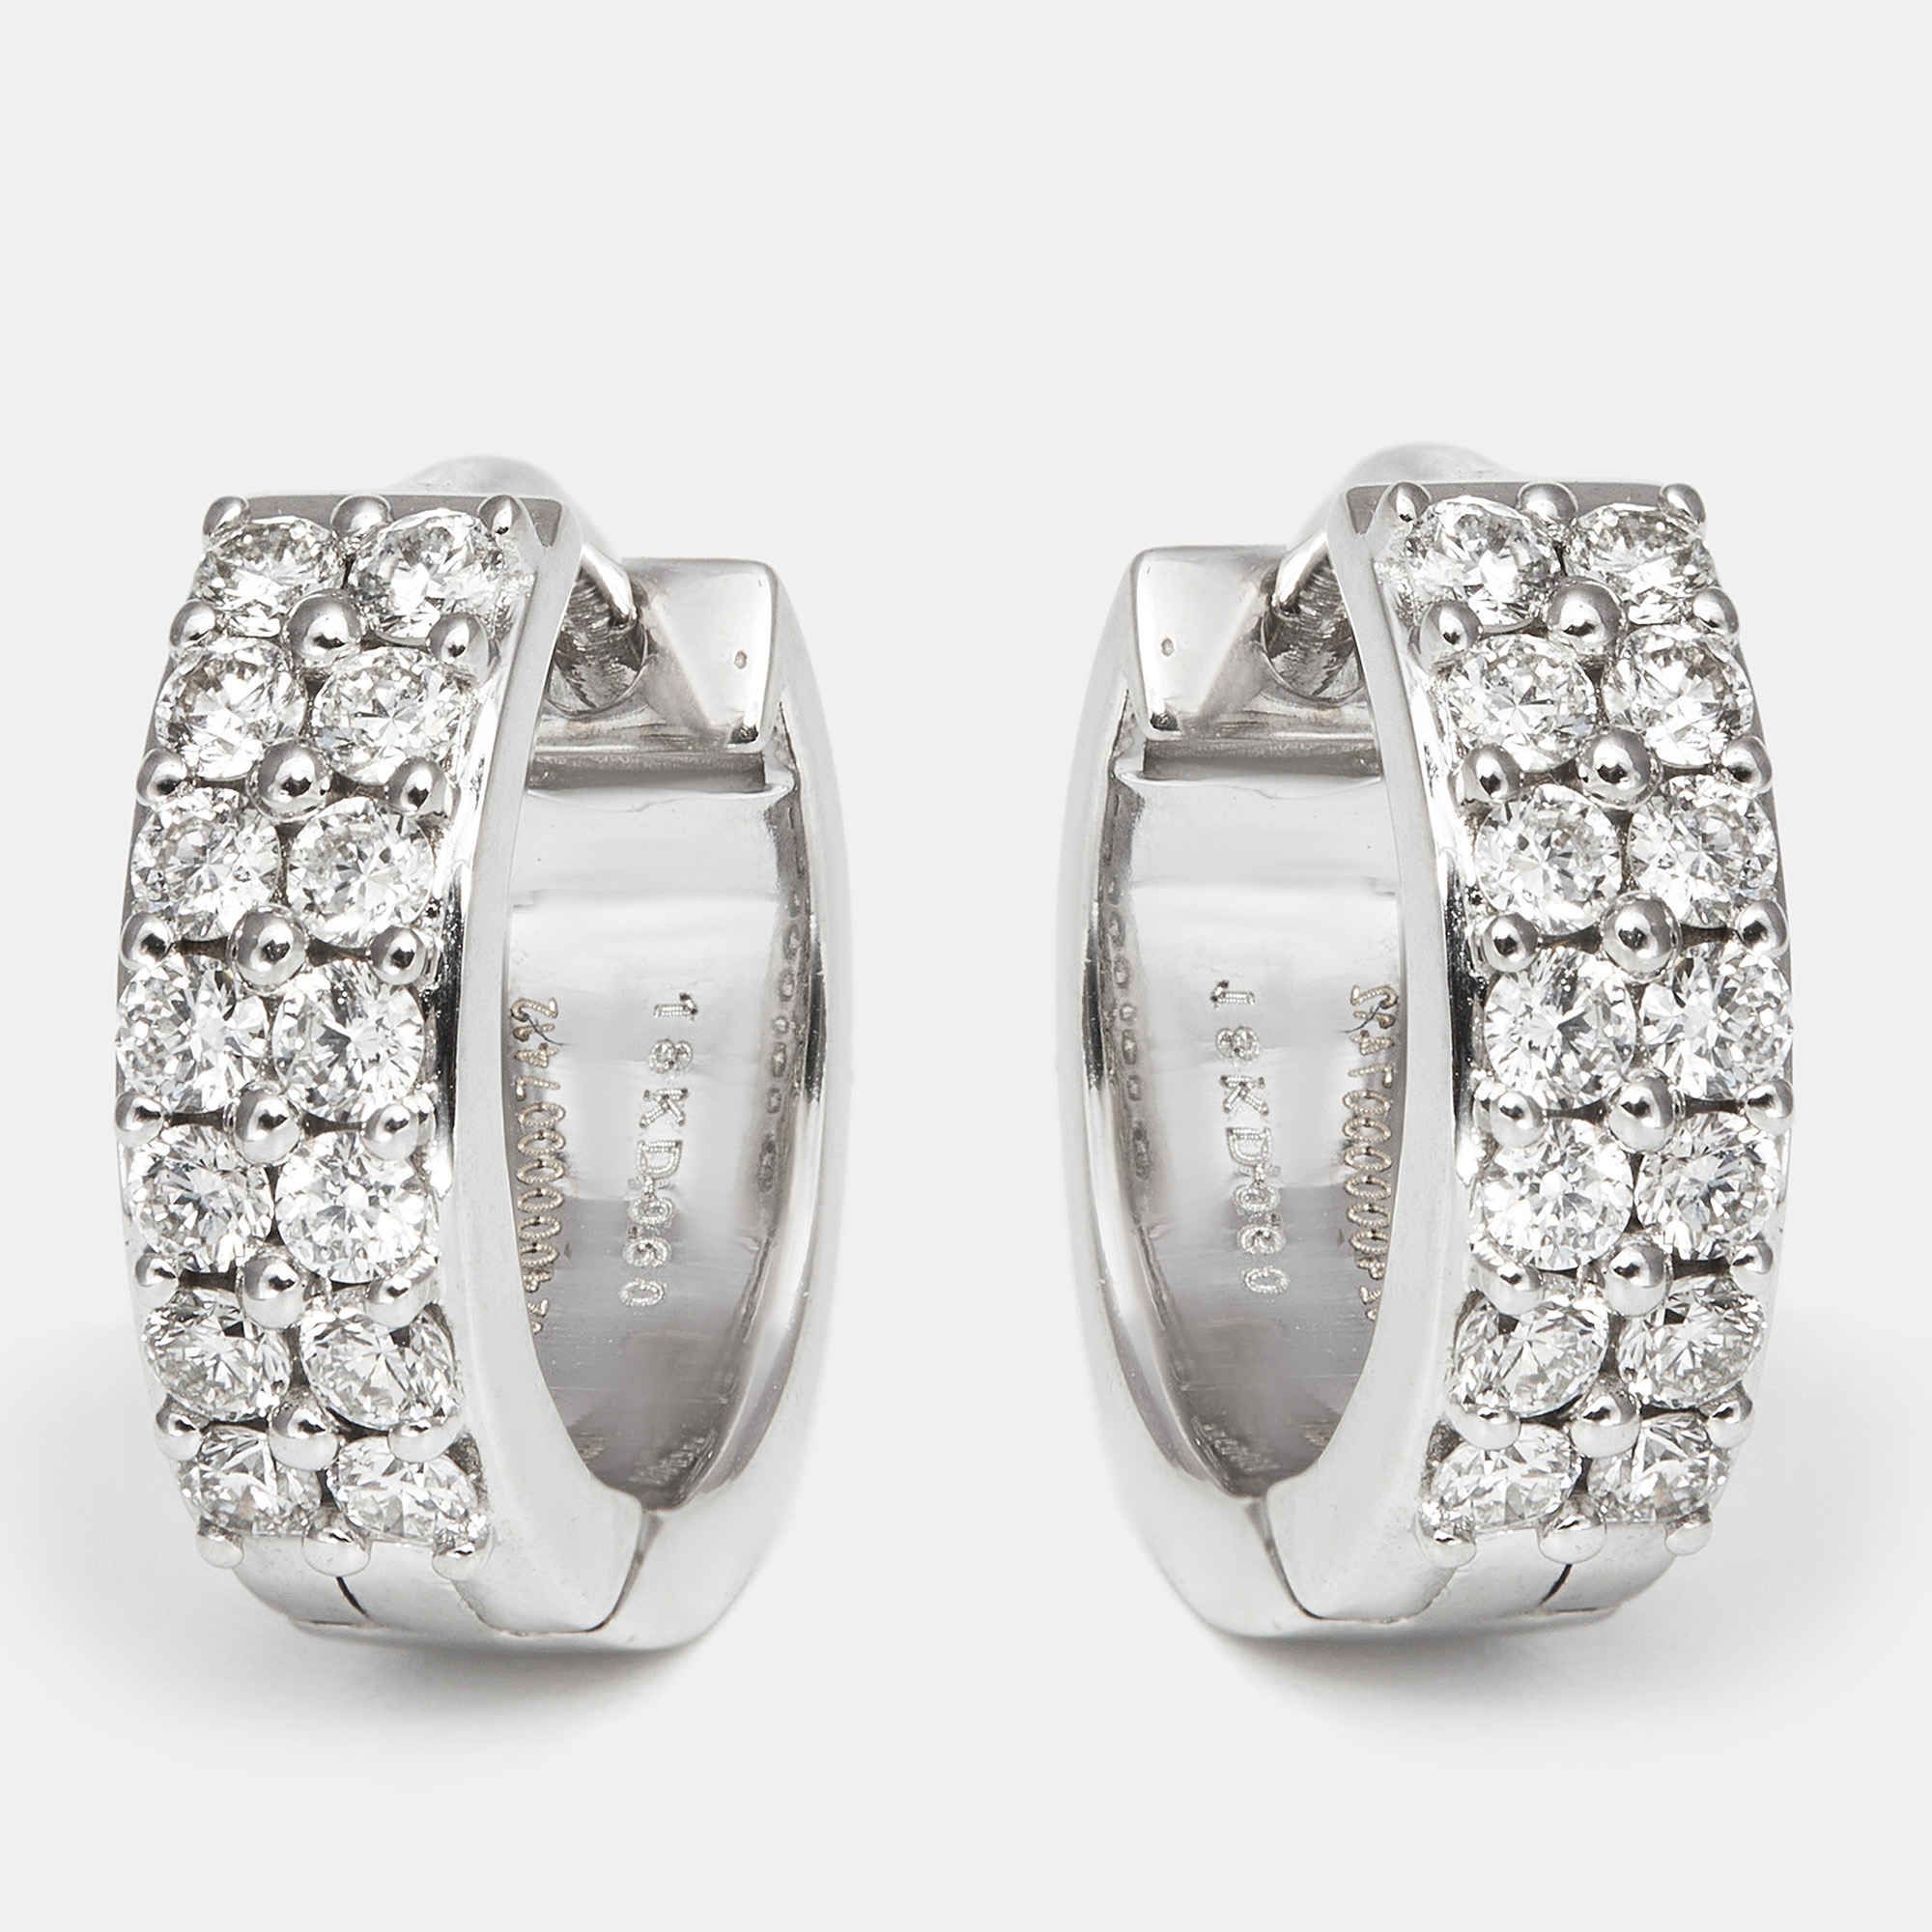 The diamond edit sparkling diamond 0.60 cts 18k white gold hoop earrings